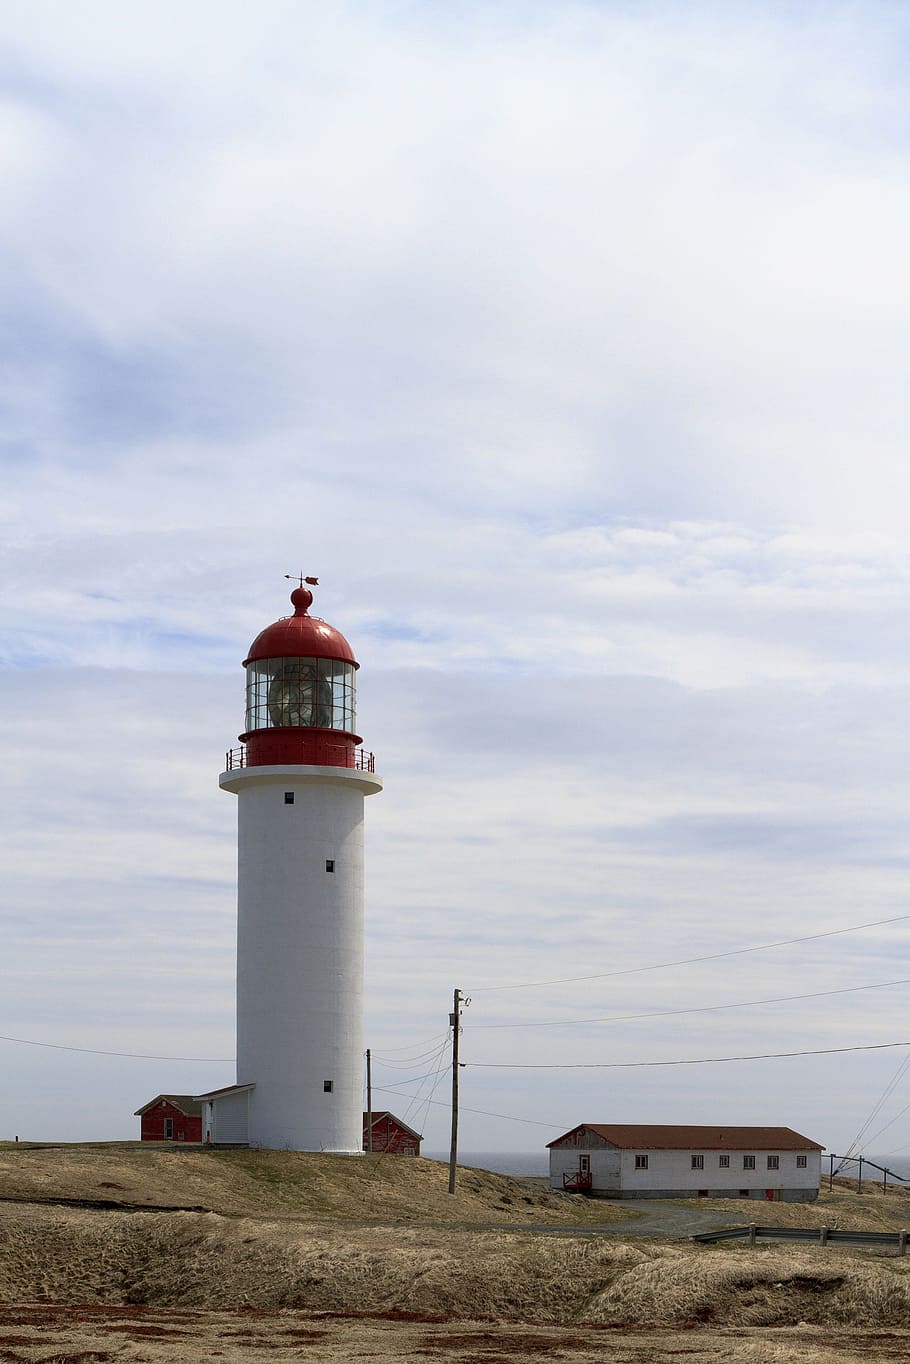 Historic Cape Race Lighthouse, Newfoundland and Labrador, Canada